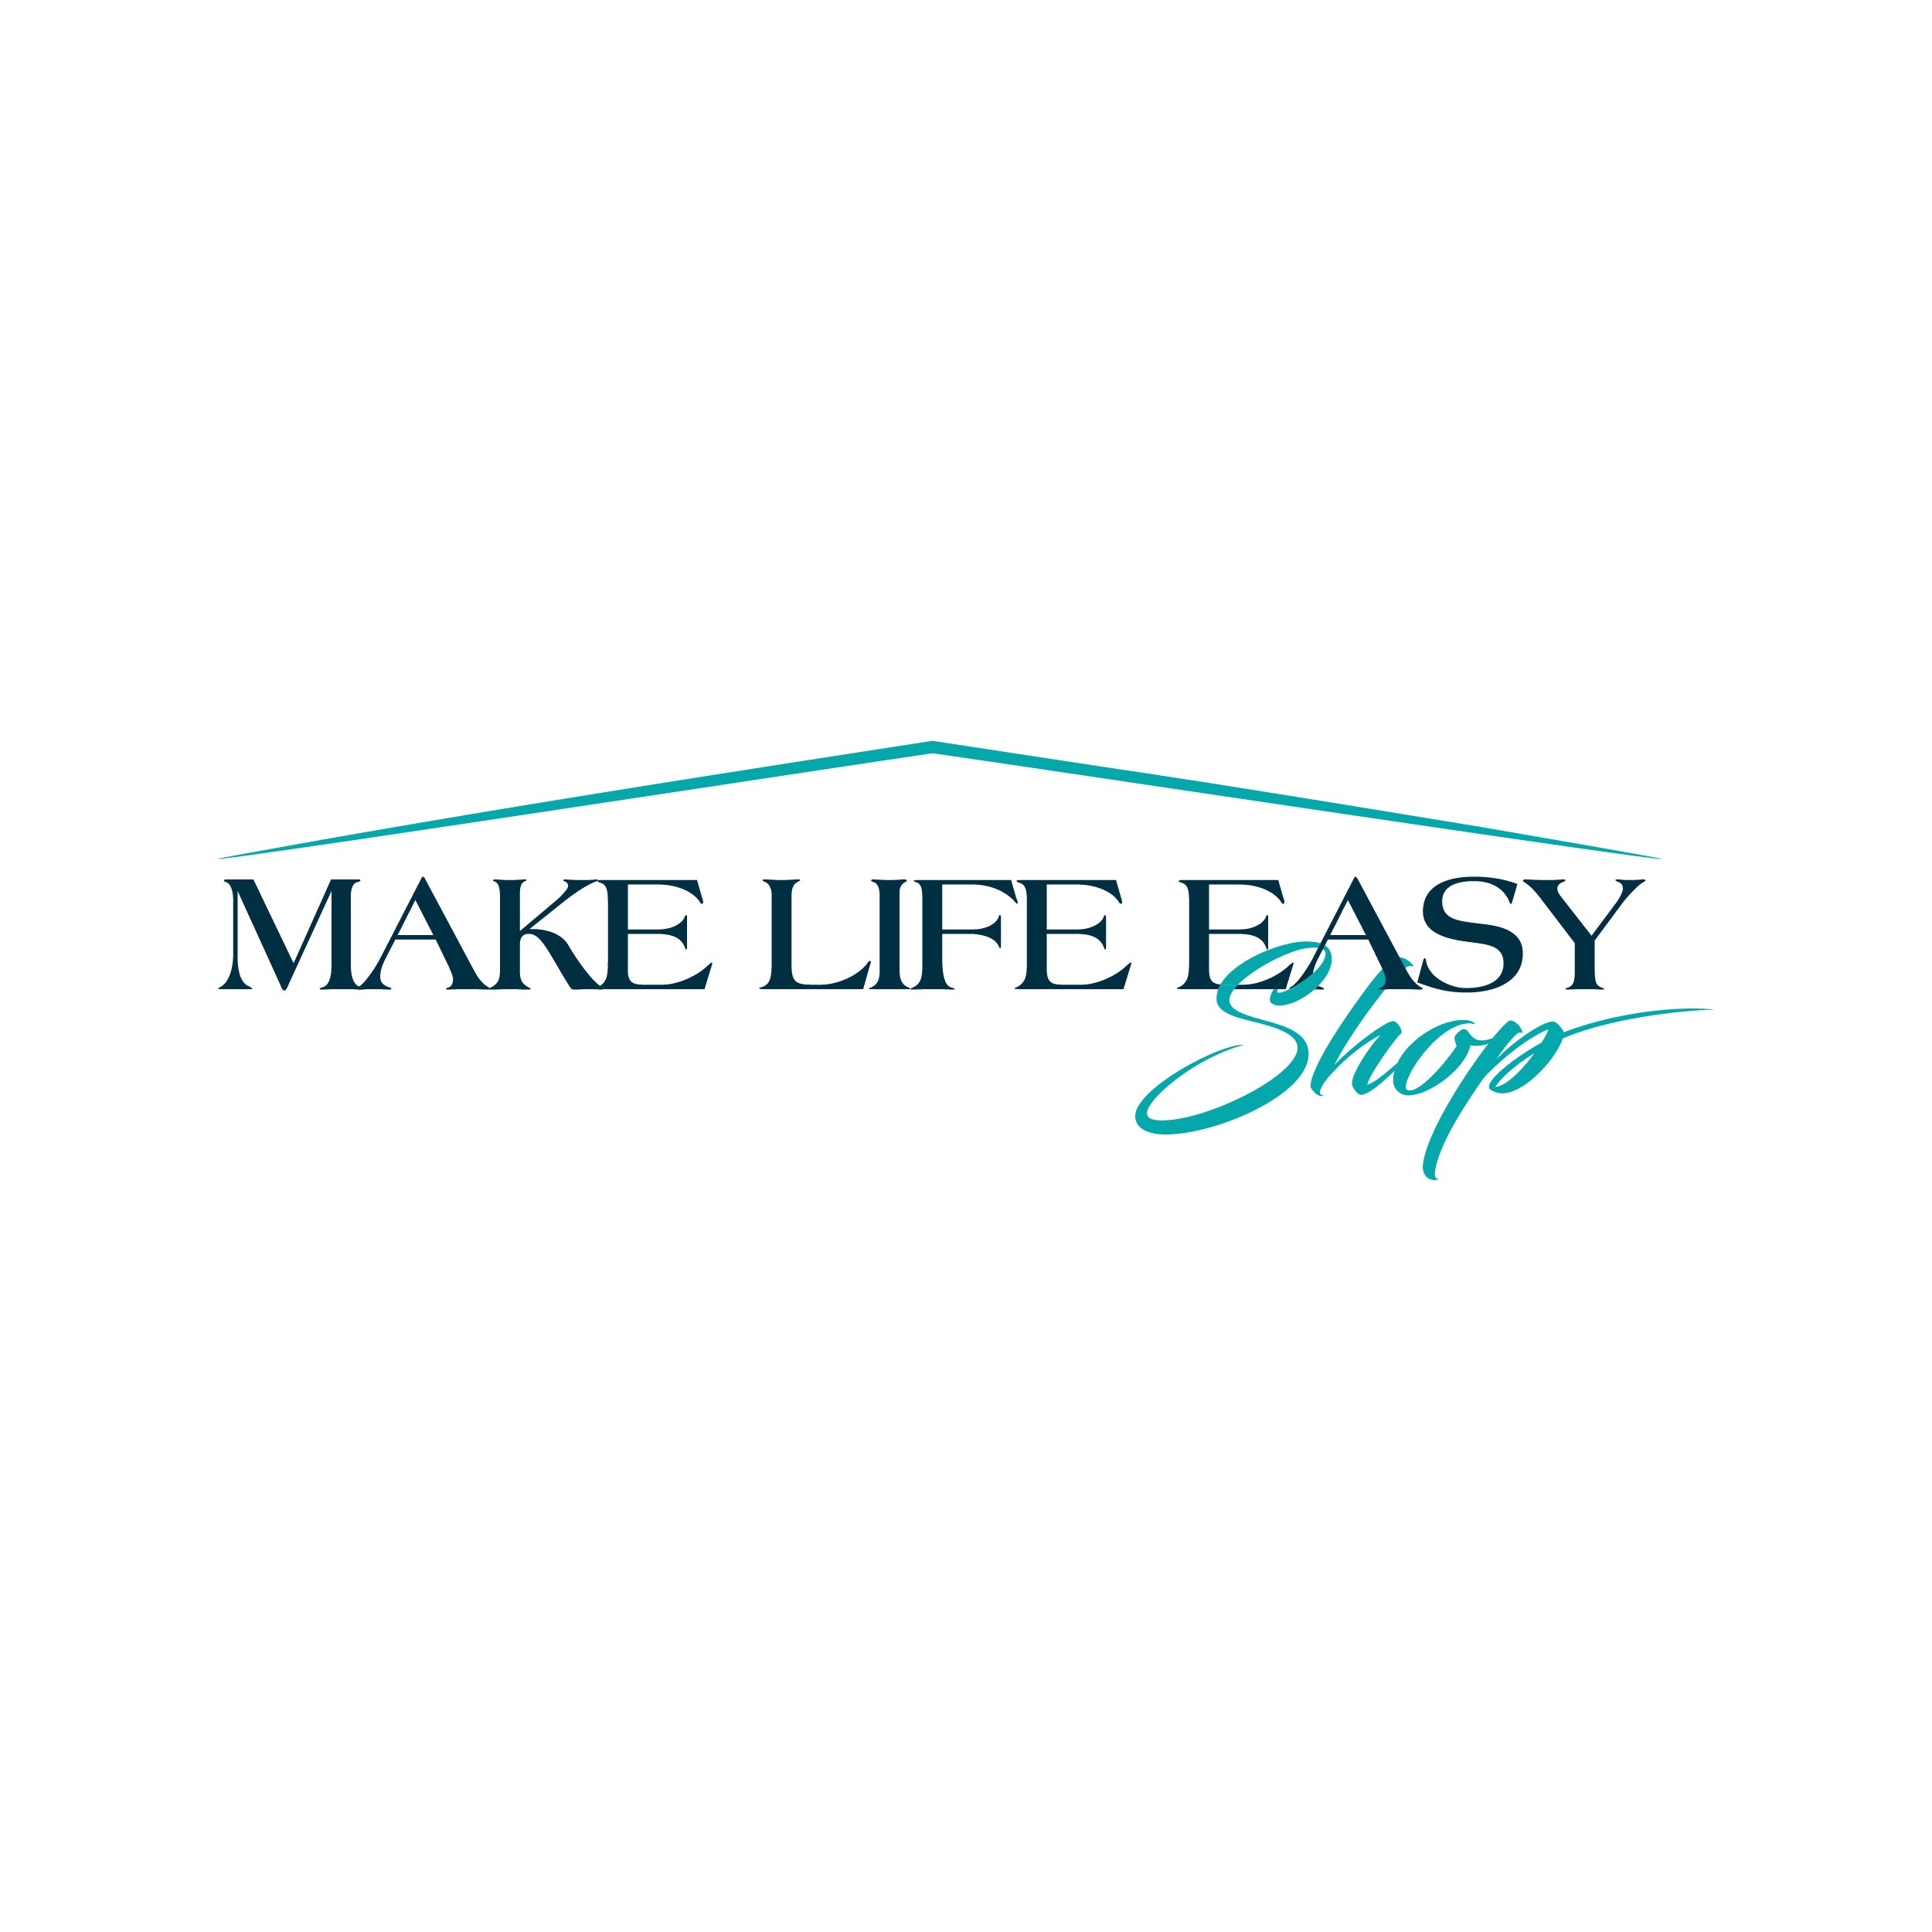 Make life easy…